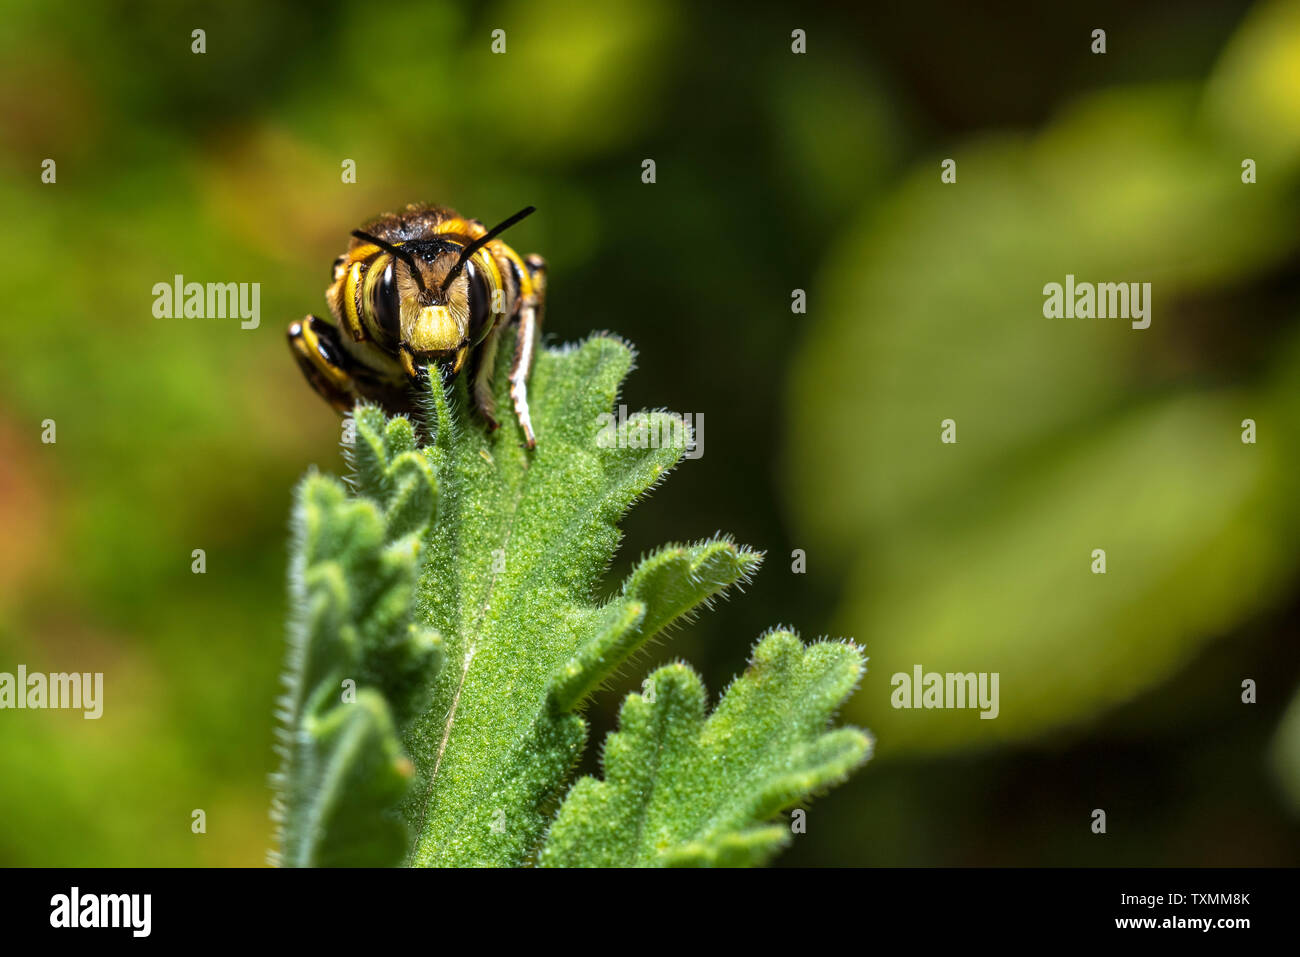 Bumblebee on a Pelargonium leaf, close up Stock Photo